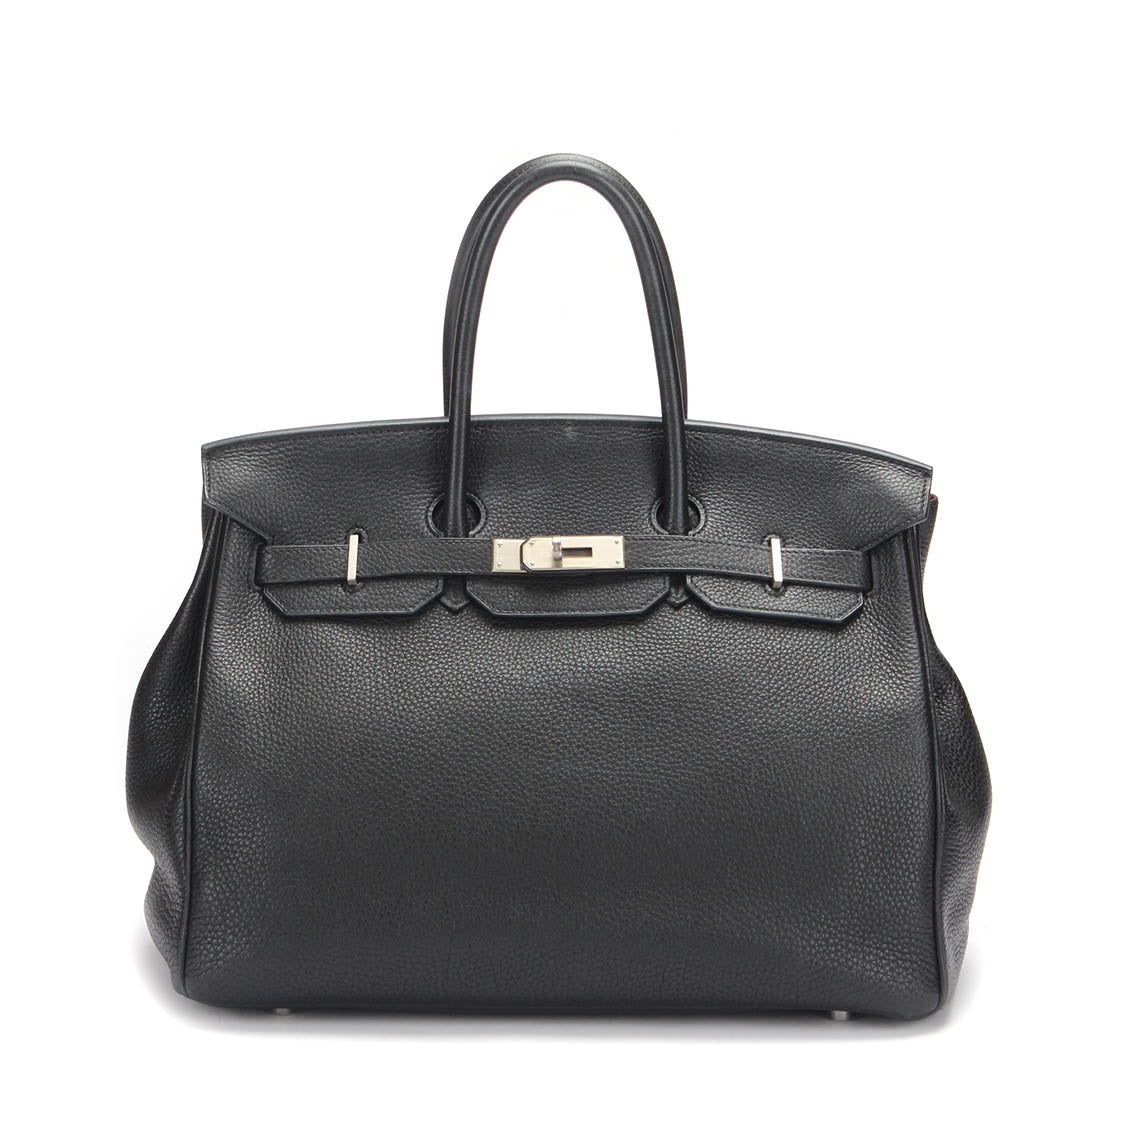 Hermes Togo Birkin 35 Leather Handbag in Excellent condition